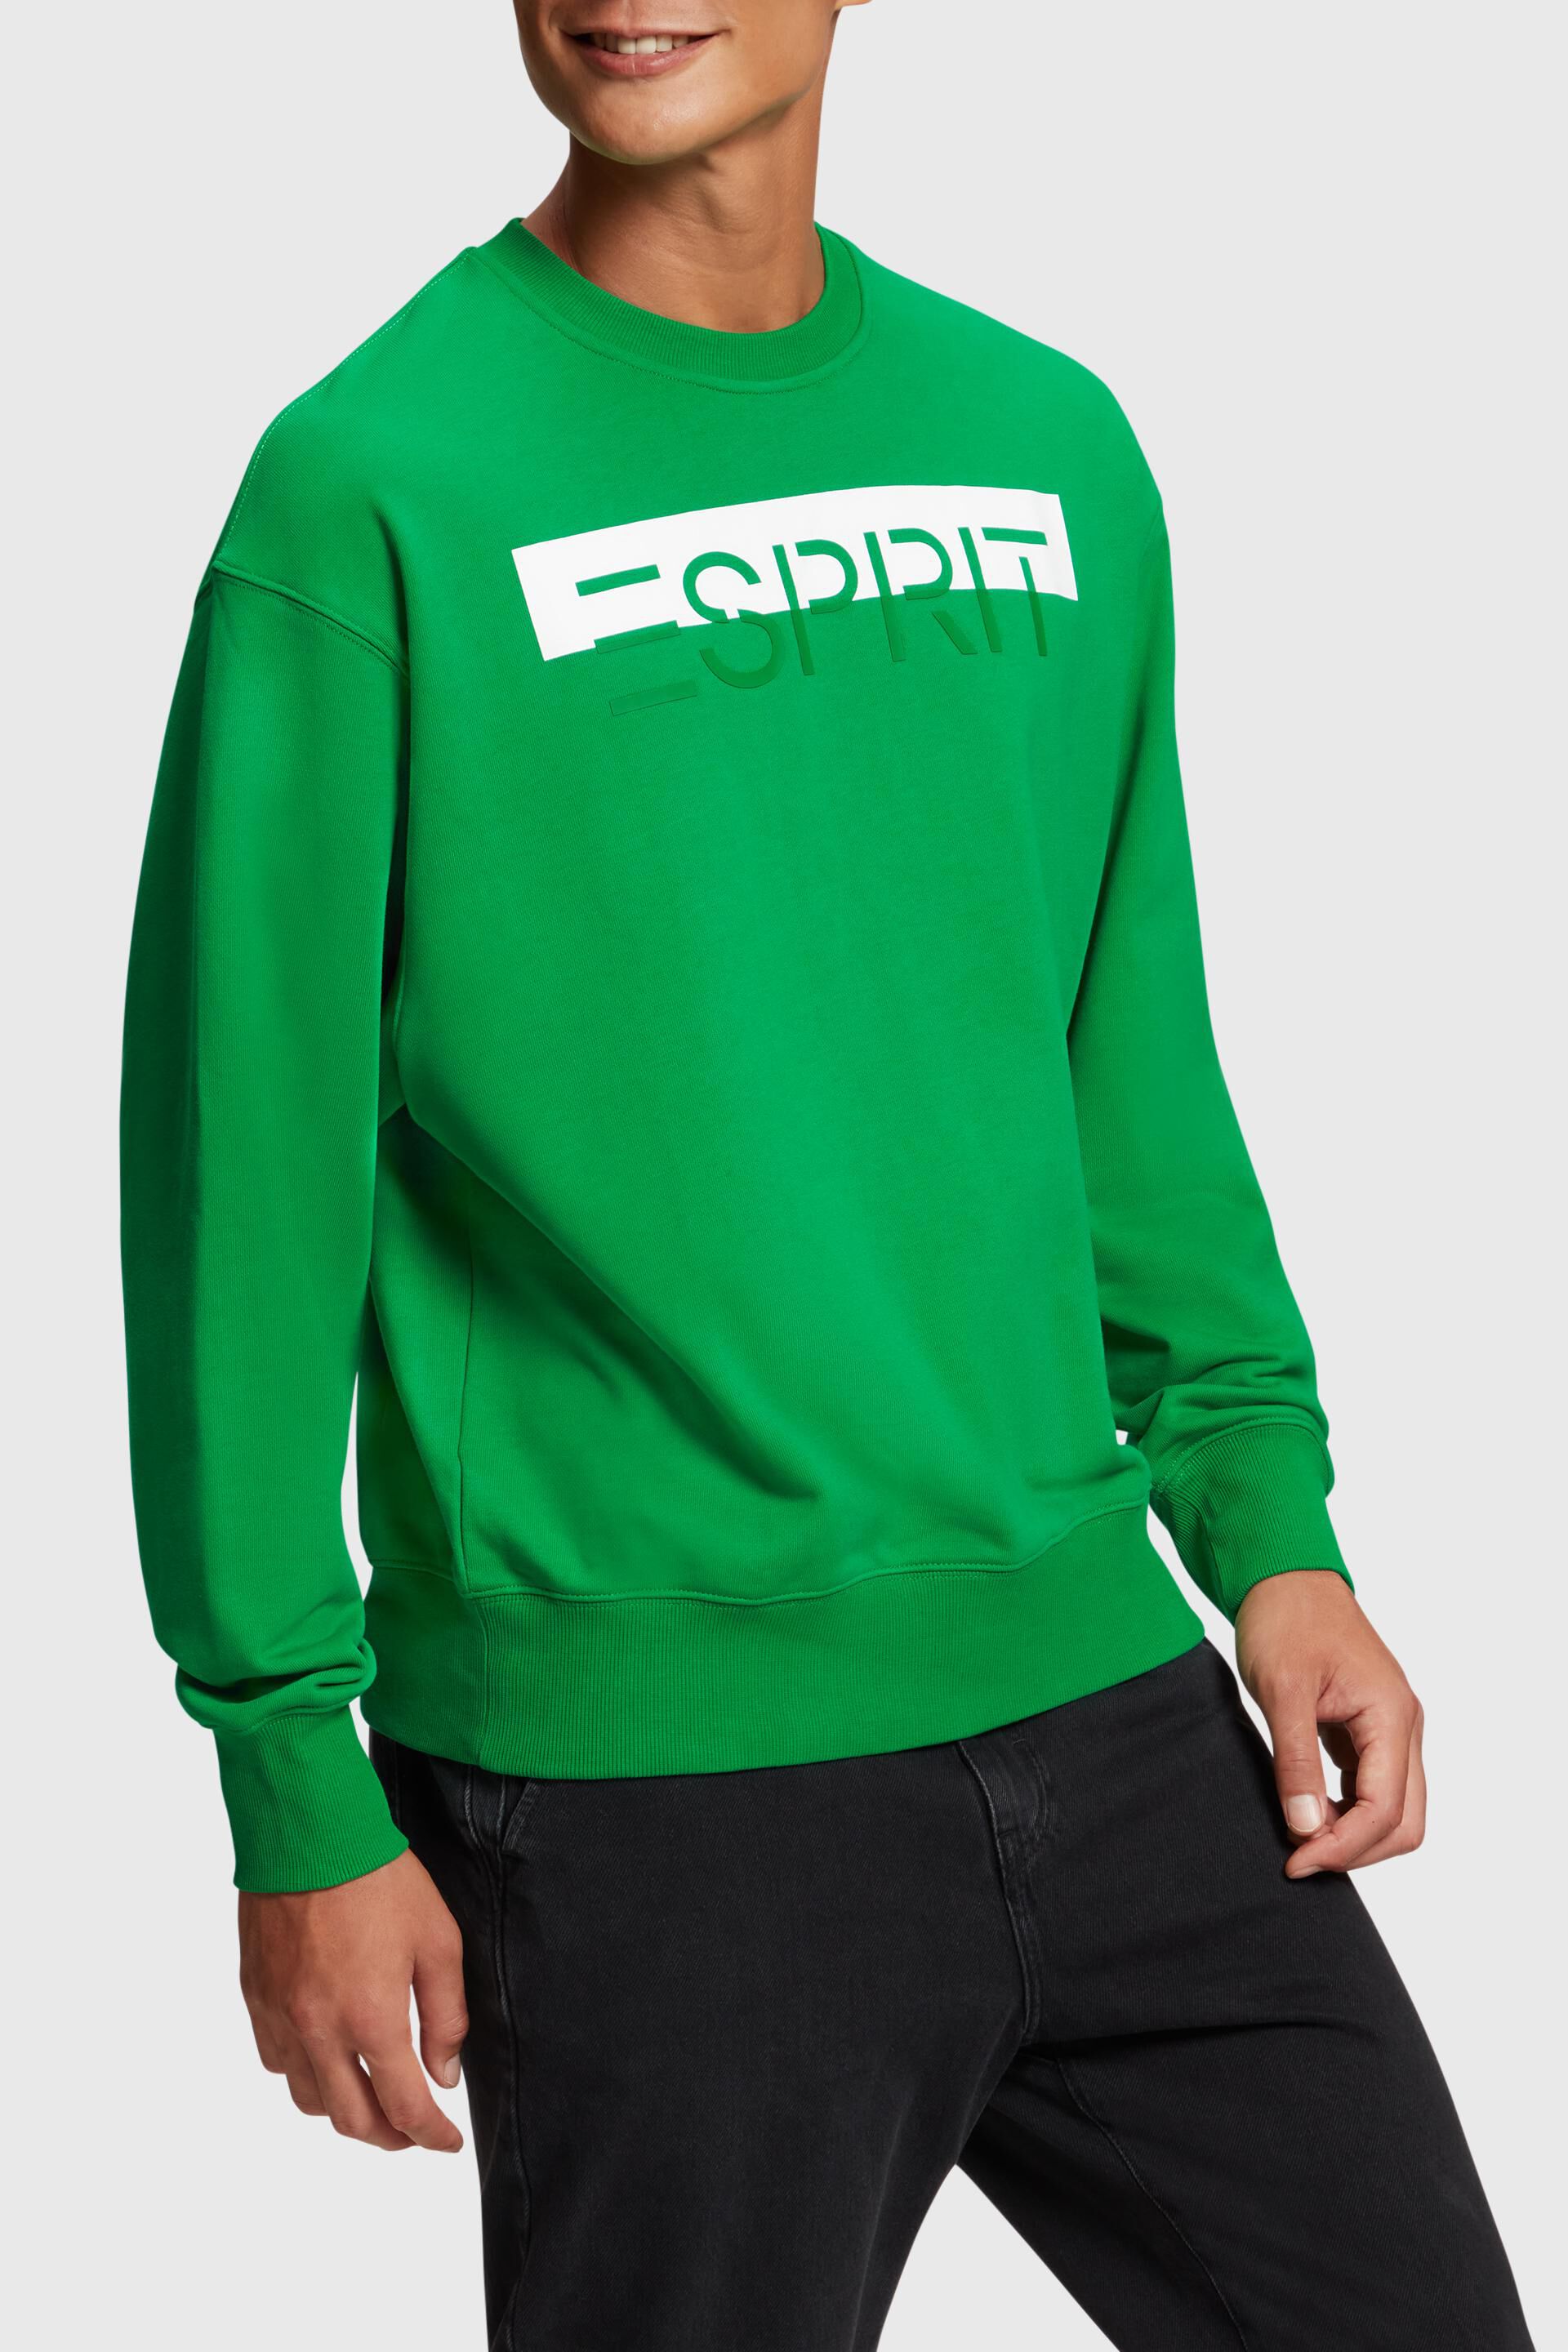 Esprit applique shine sweatshirt Matte logo